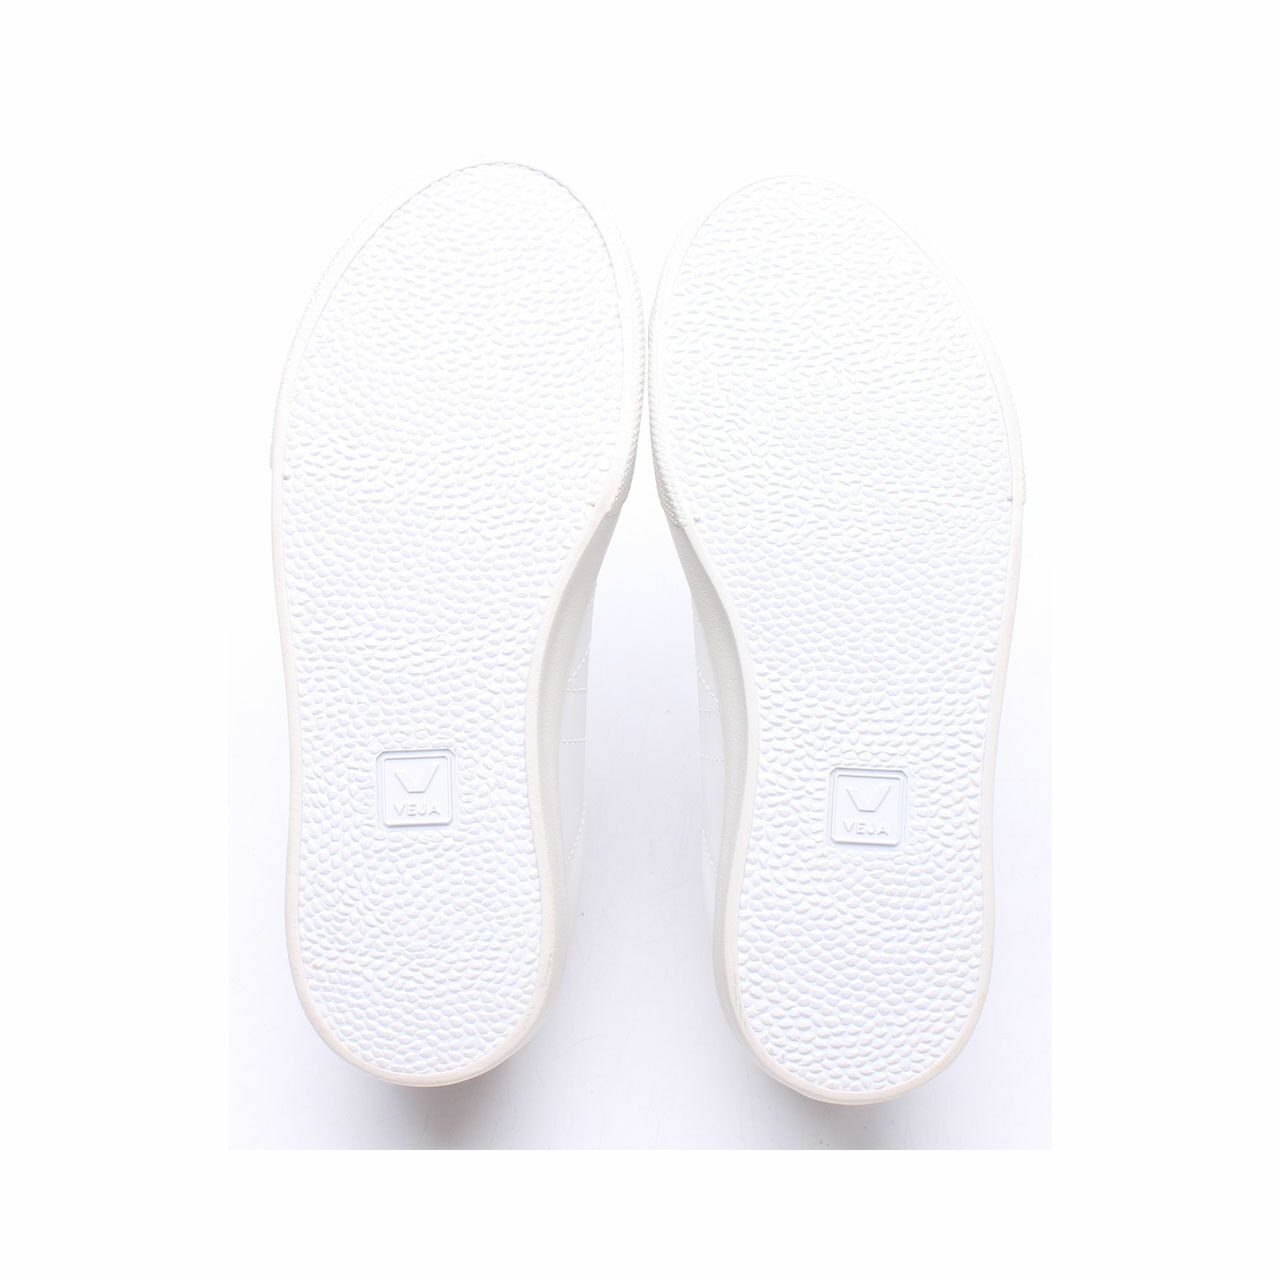 Veja White Esplar White Sneakers